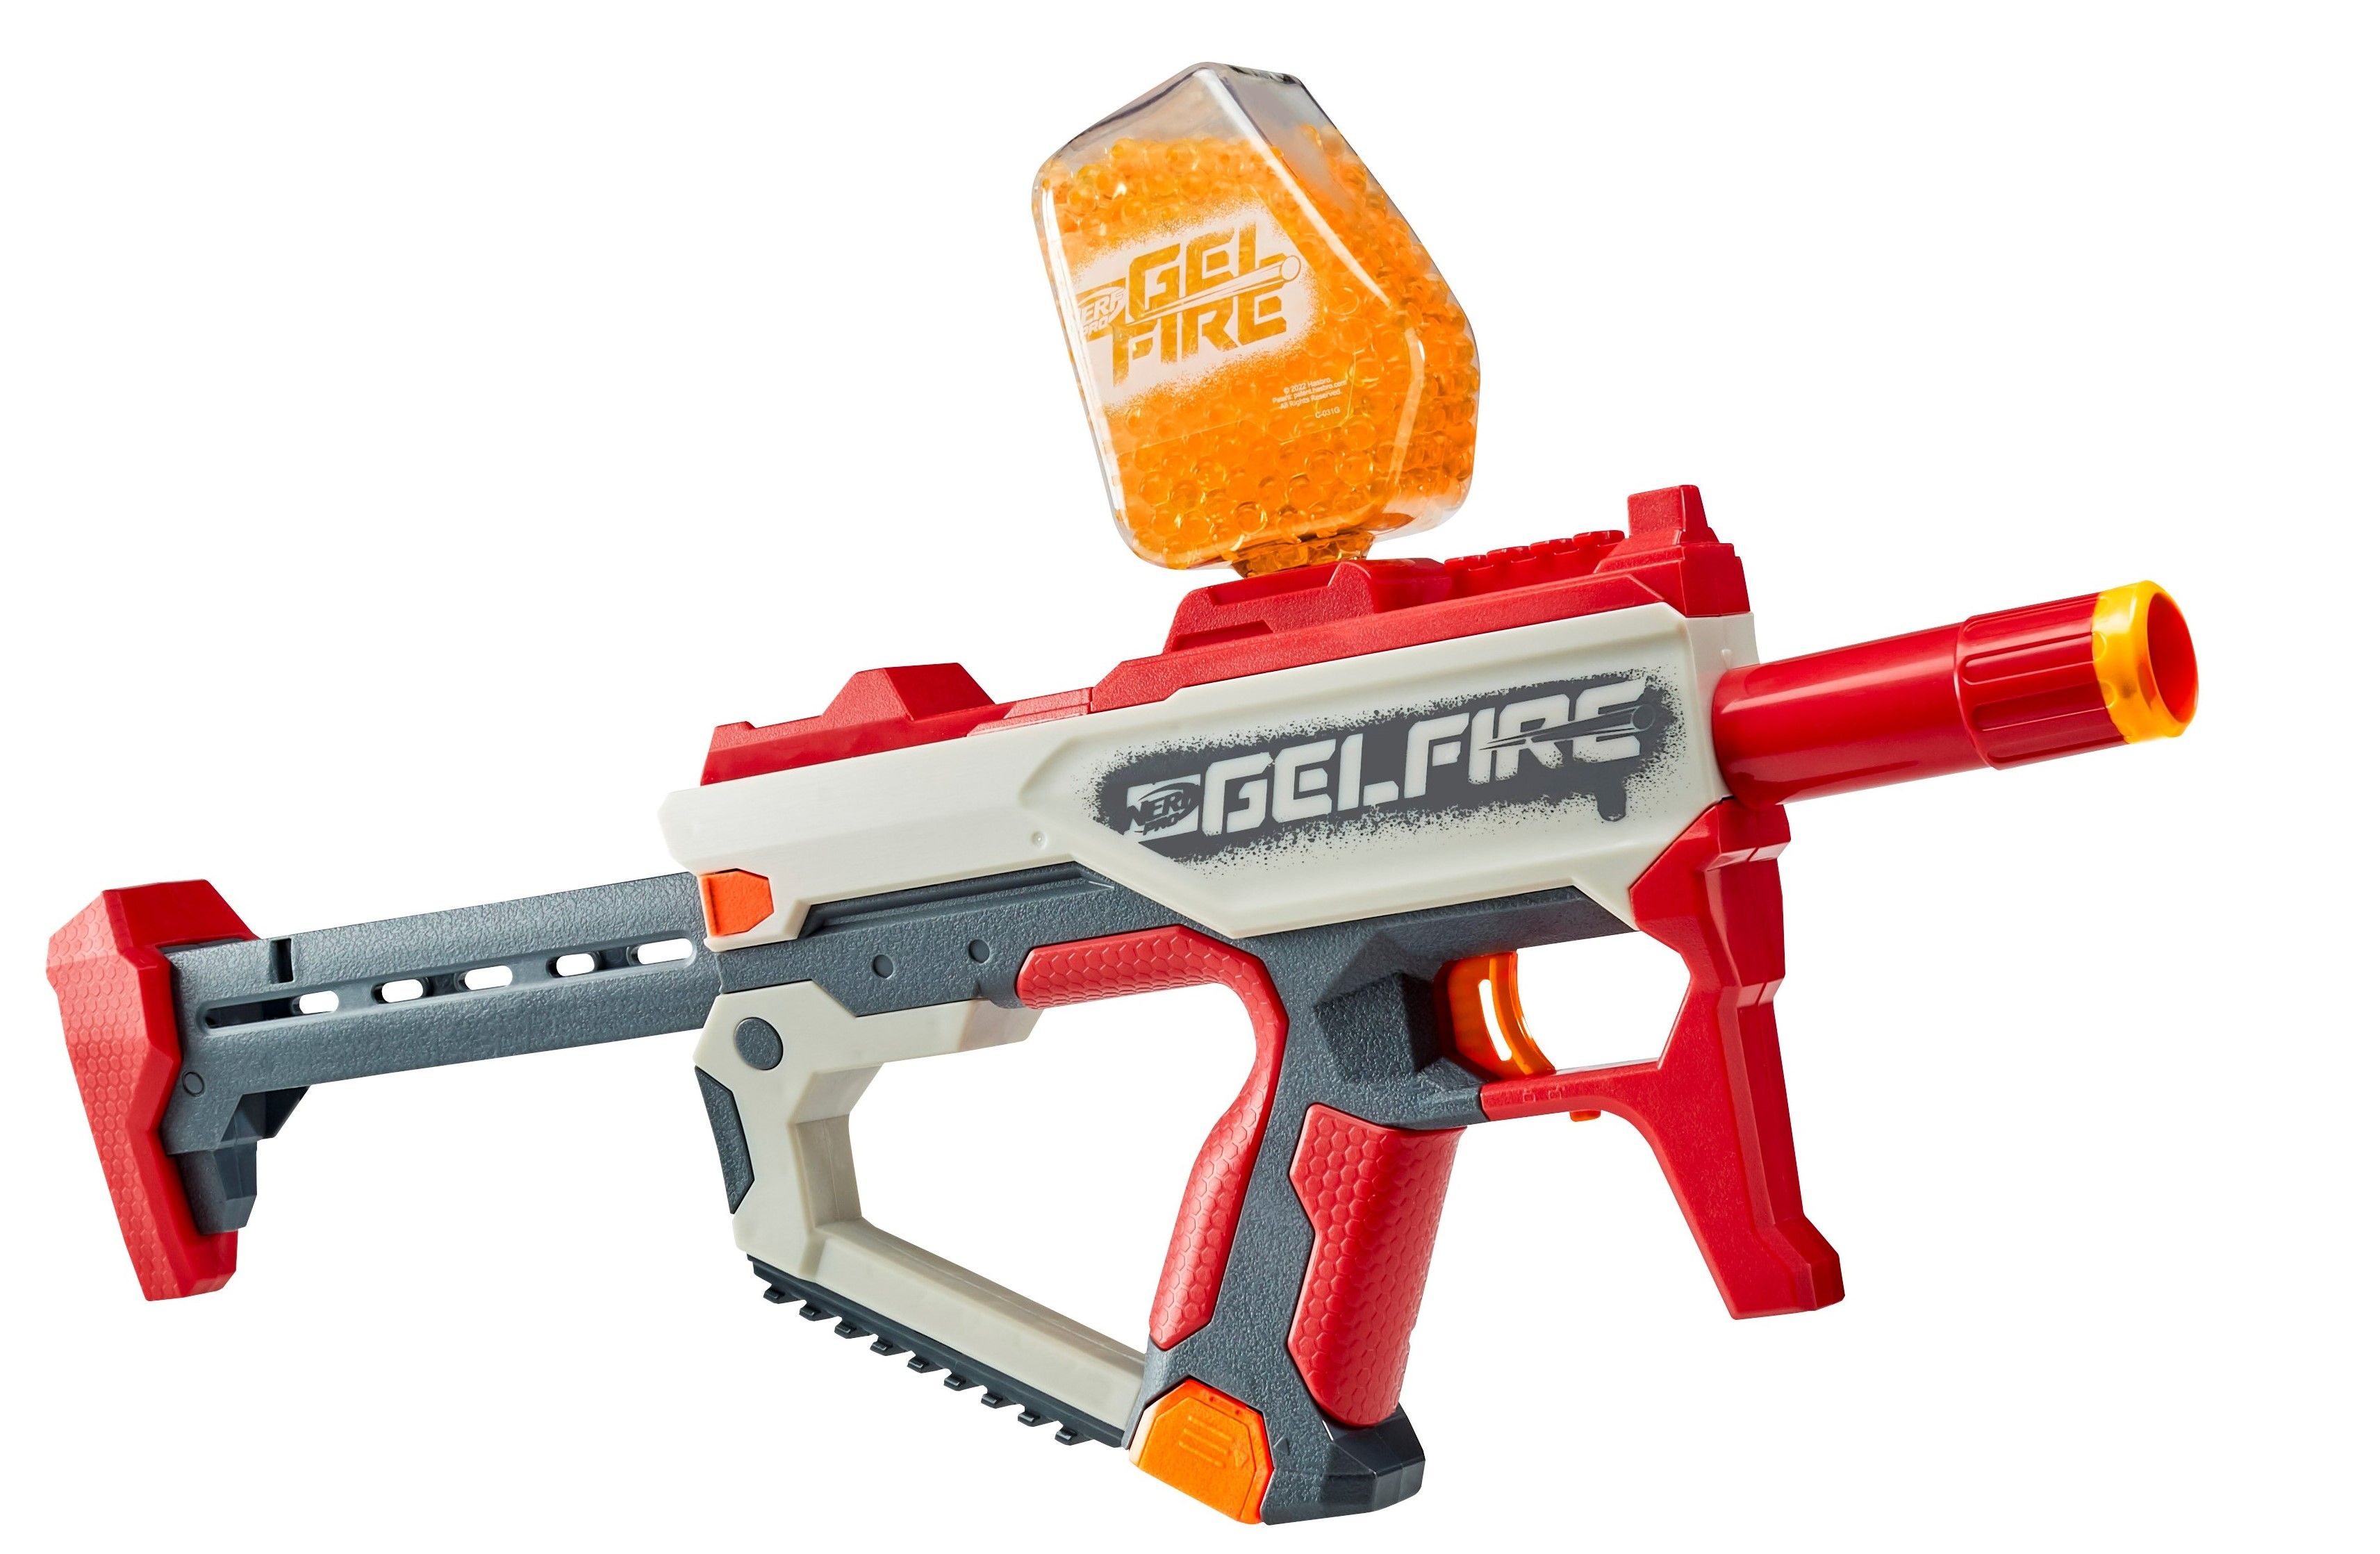 Nerf Pro Gelfire Blaster